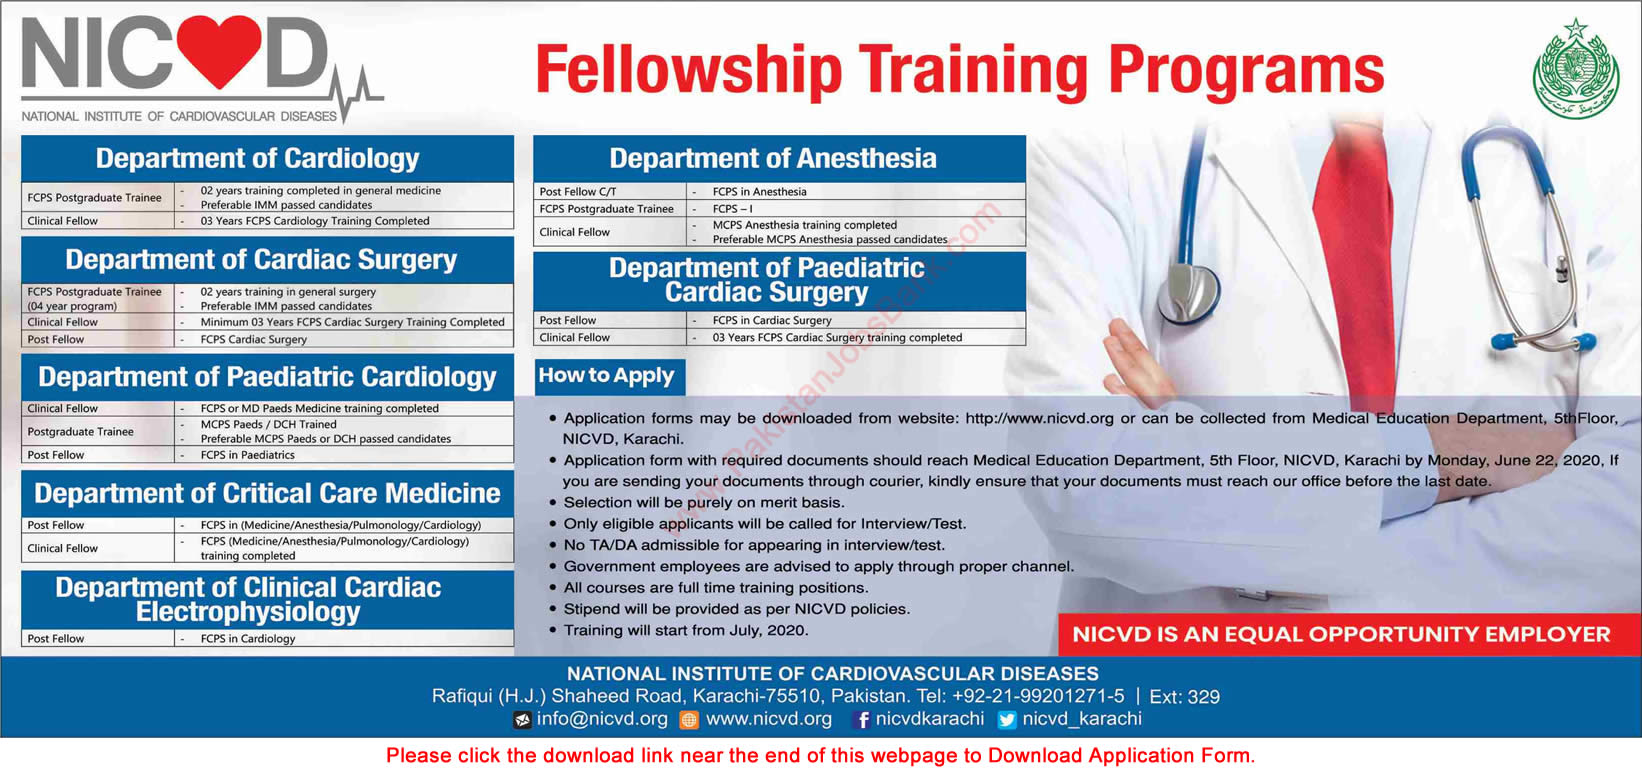 NICVD Fellowship Training Program 2020 June Application Form National Institute of Cardiovascular Diseases Latest